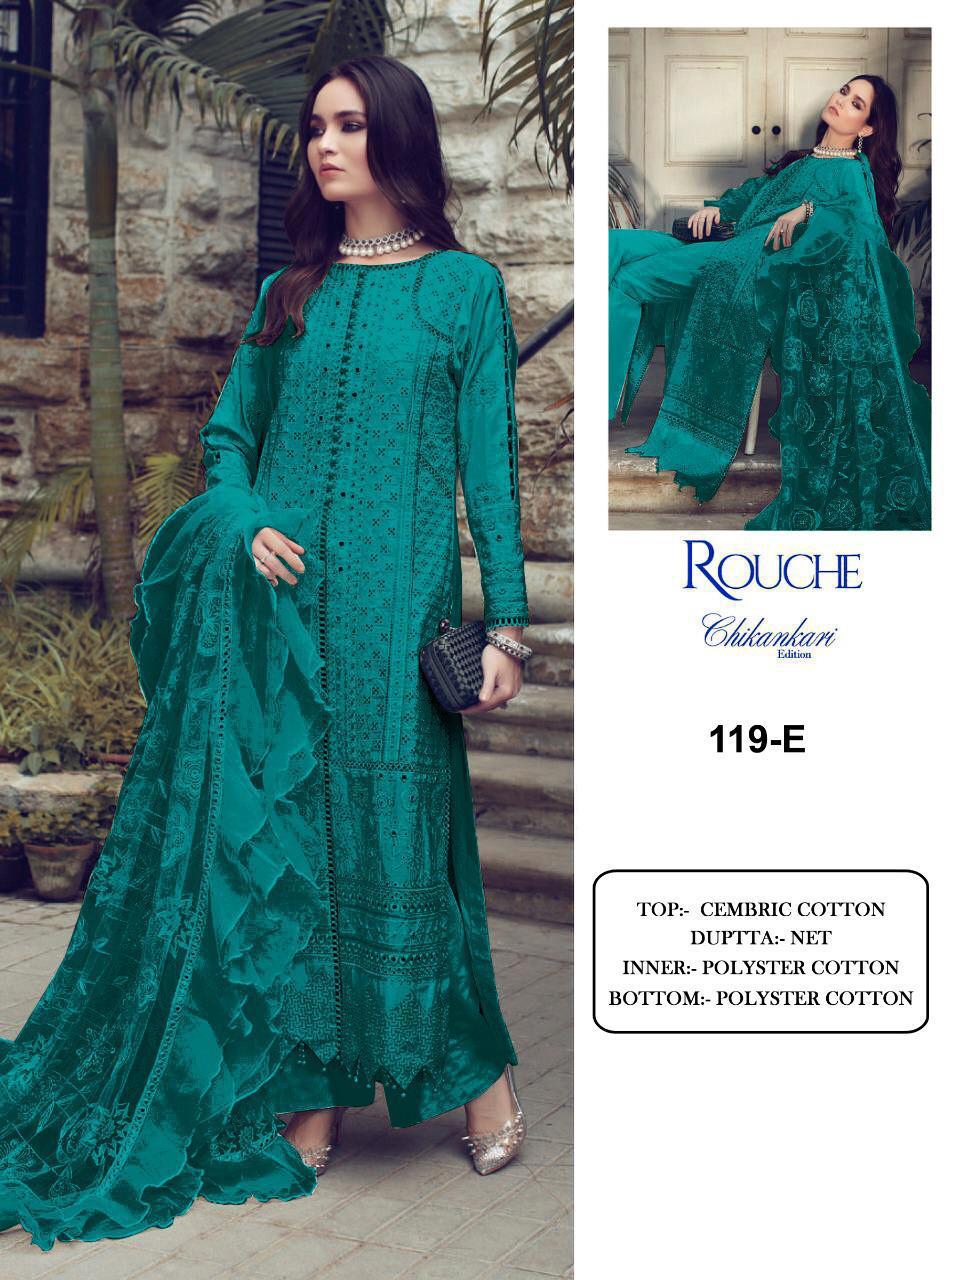 Pakistani Suits Rouche Chikankari Edition KF 119-E